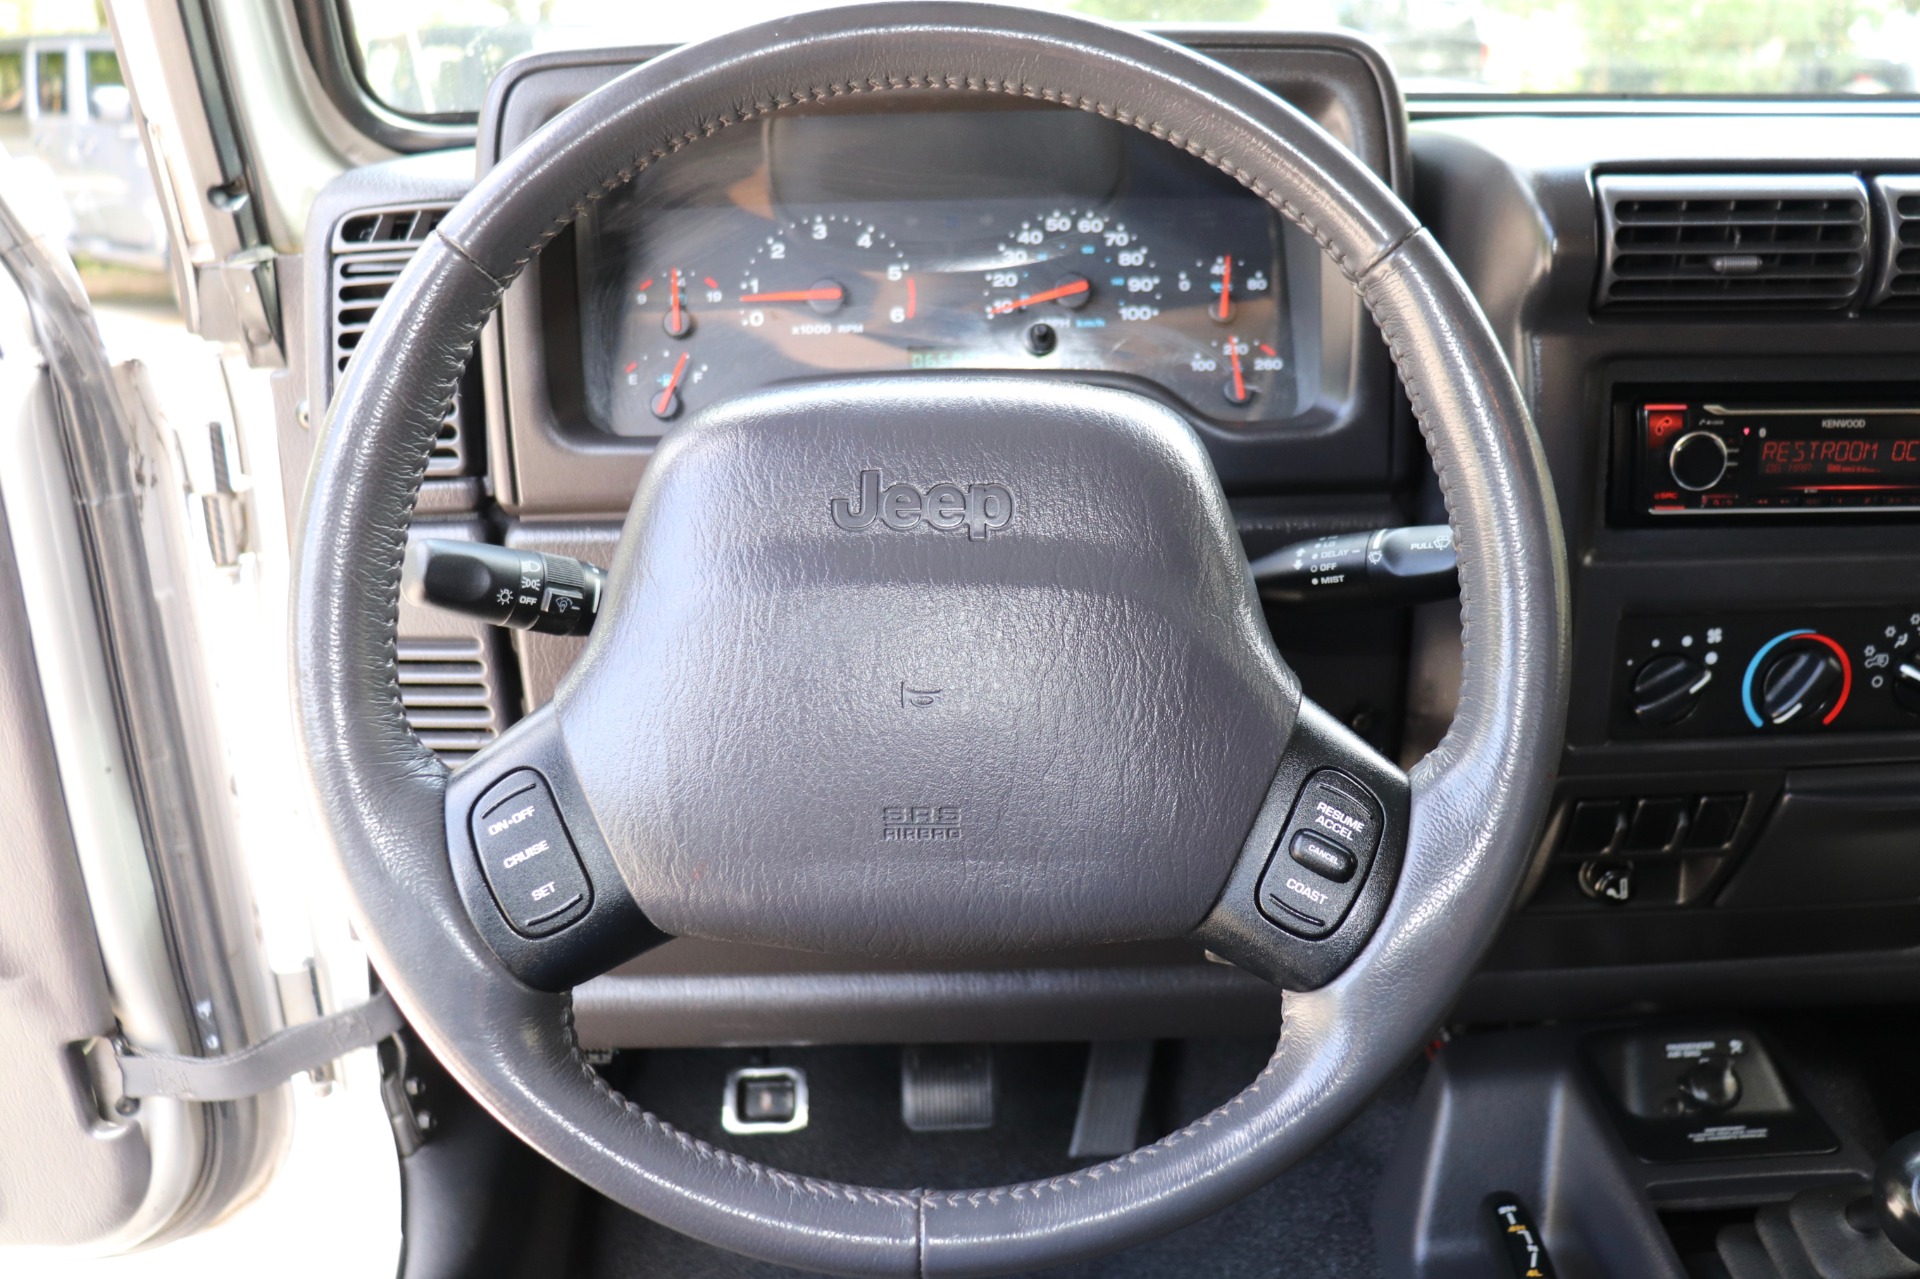 Used-2002-Jeep-Wrangler-X